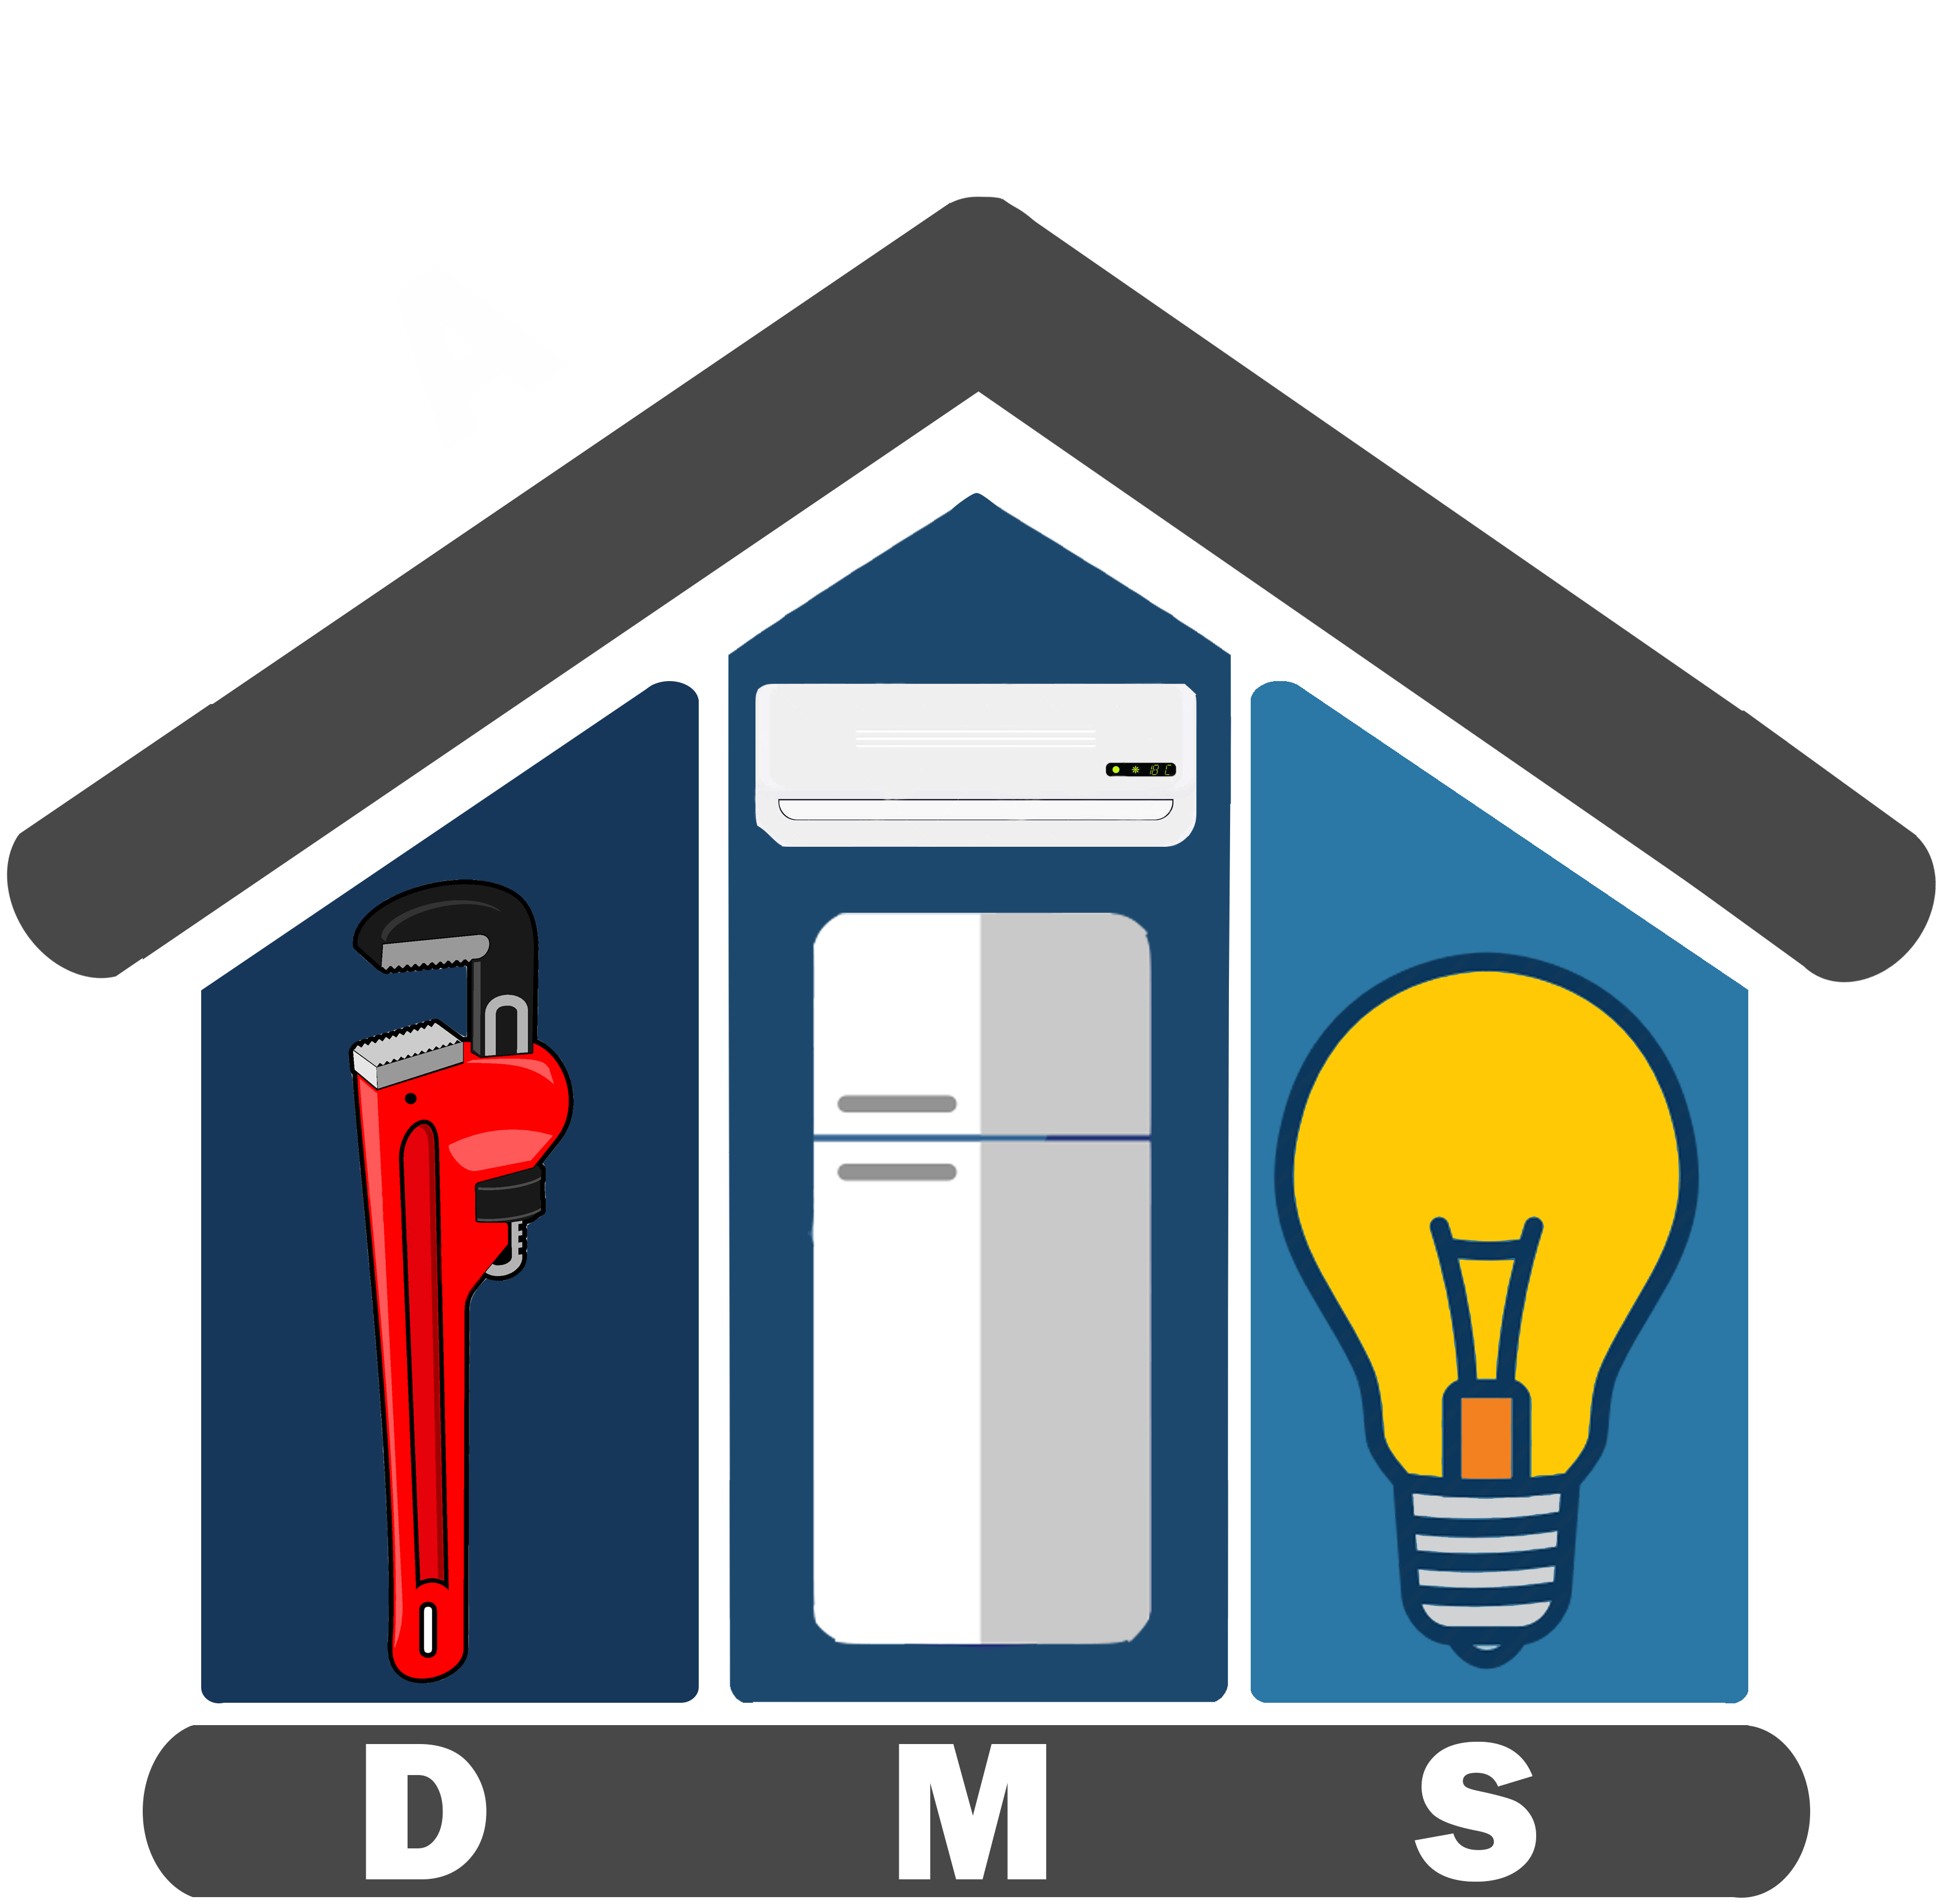 Handyman Domestic Maintenance Services, Hd Png Download